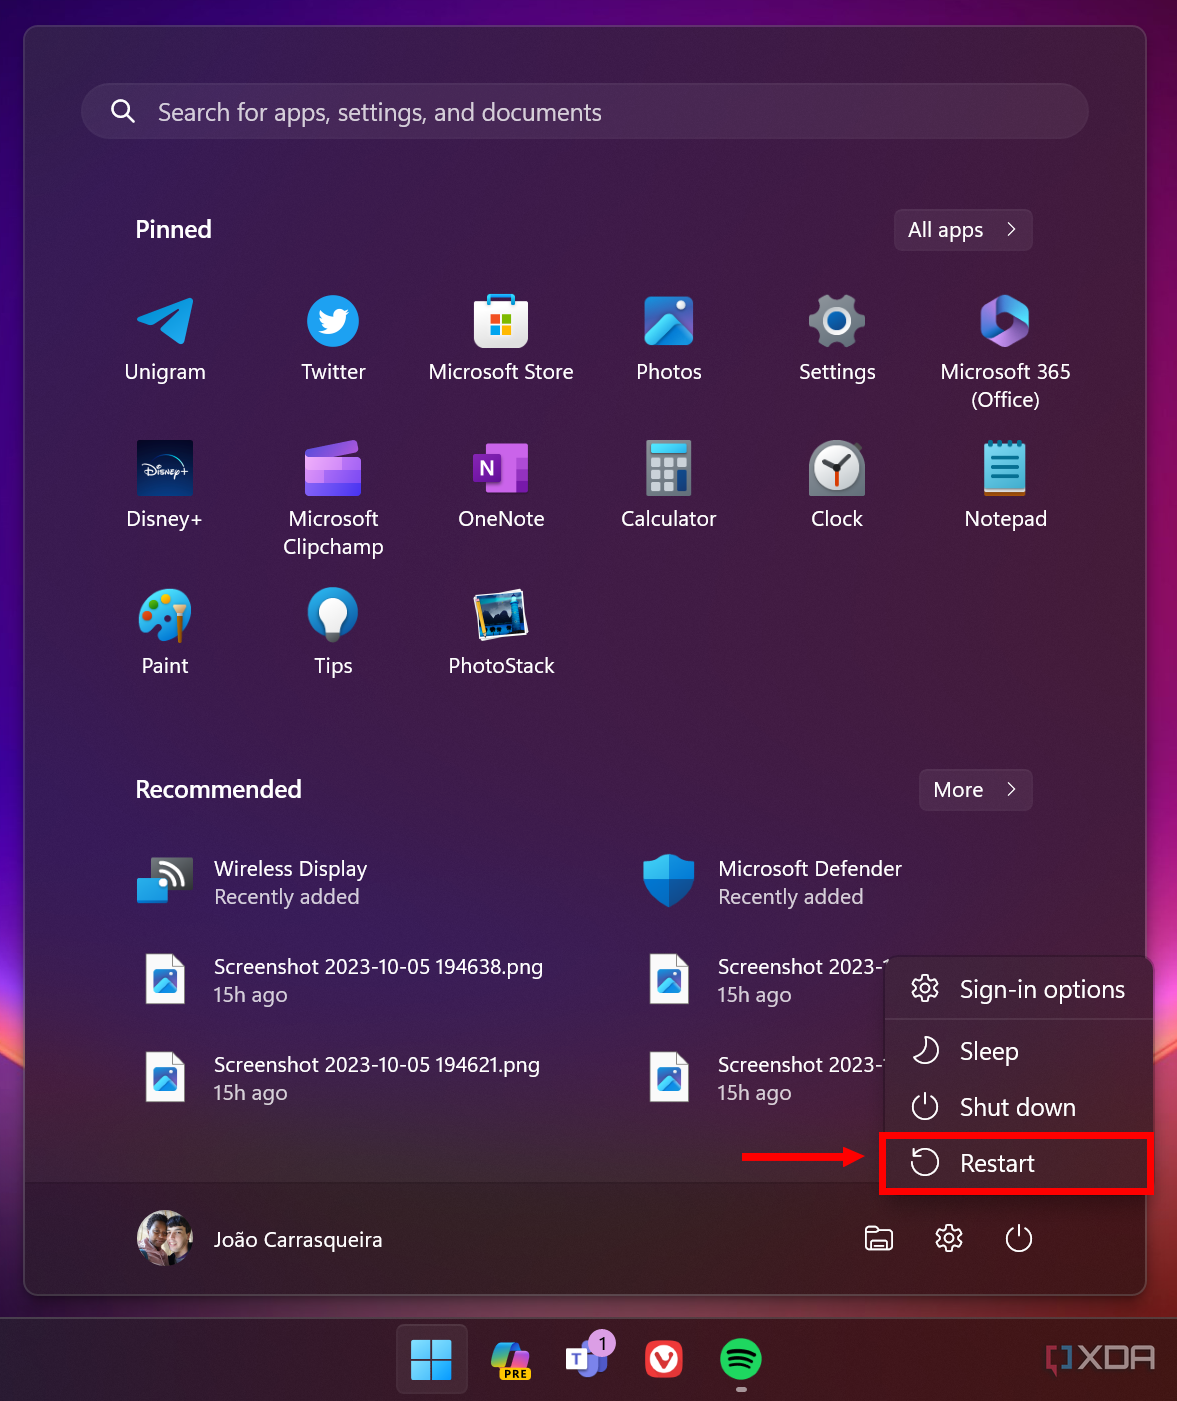 Screenshot of Windows 11 Start menu with the Restart option highlighted